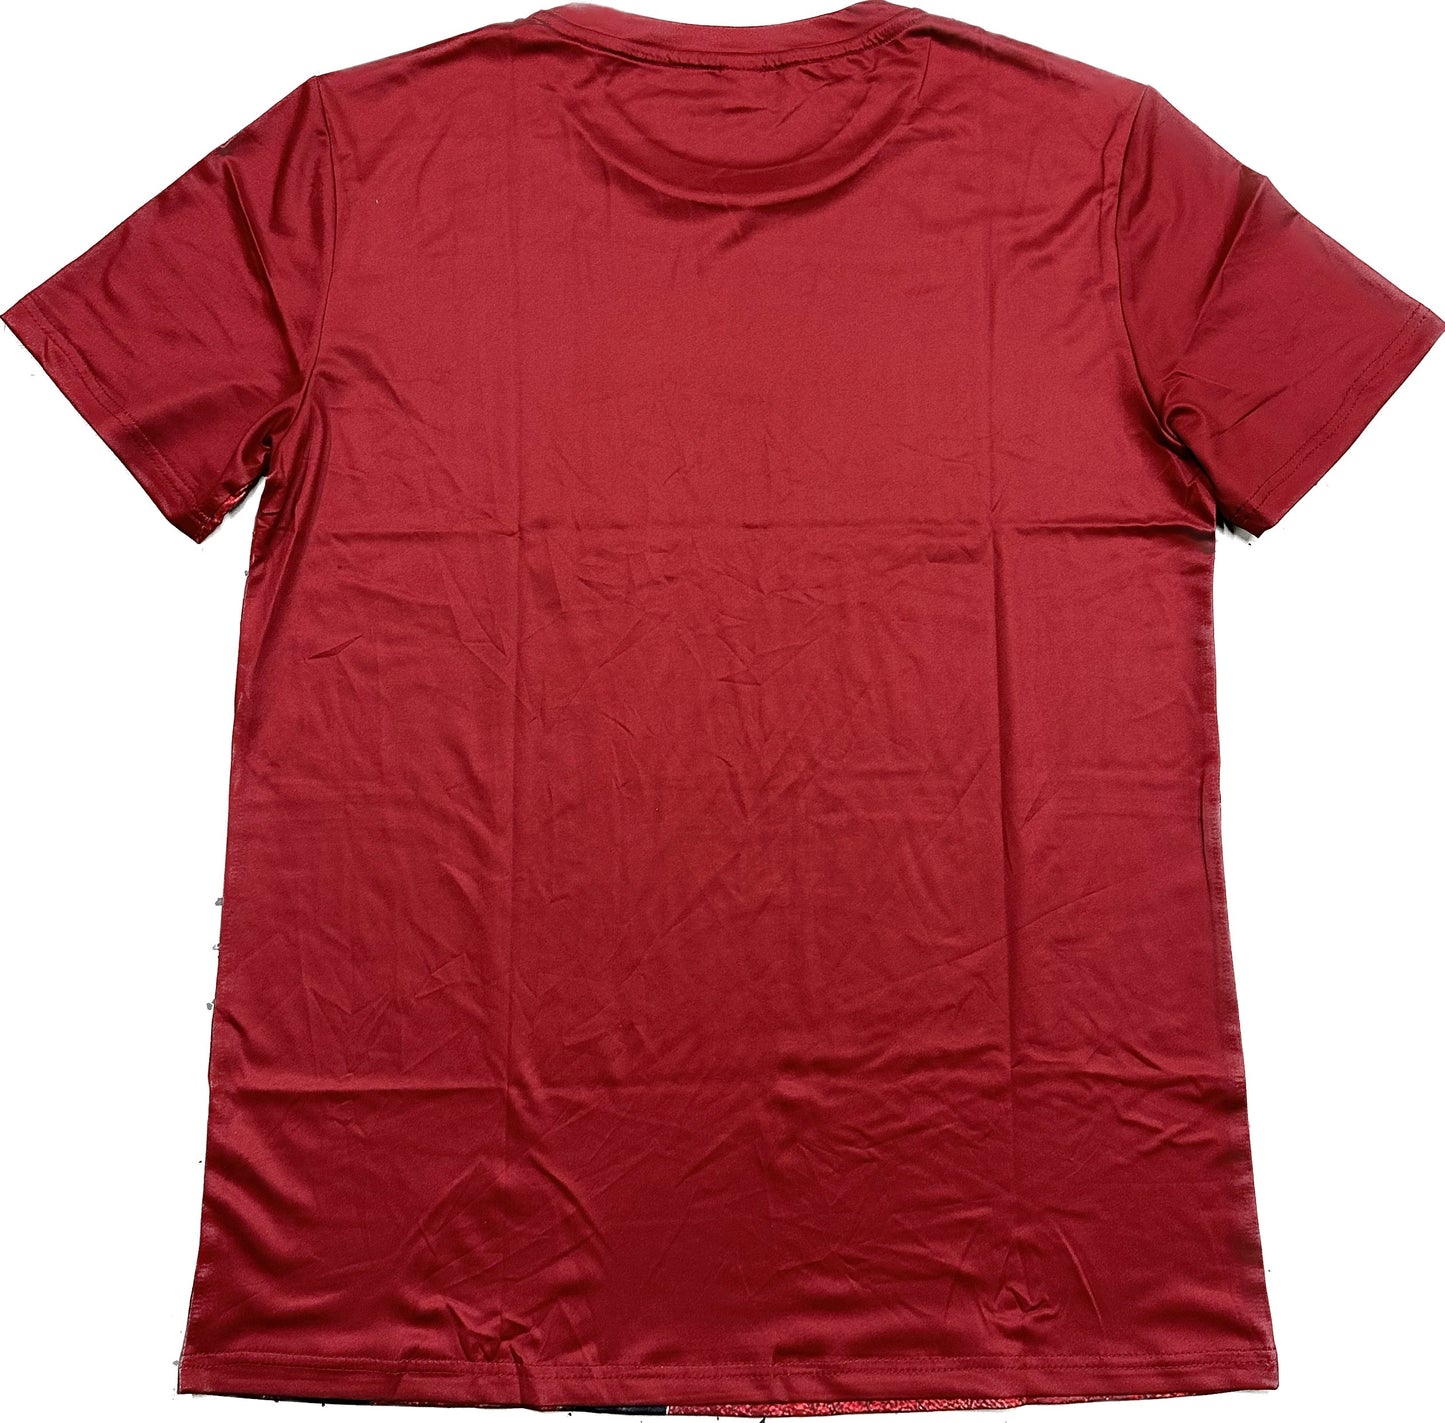 Michael Jordan Metal Universe Red PMG Men's Card T-Shirt